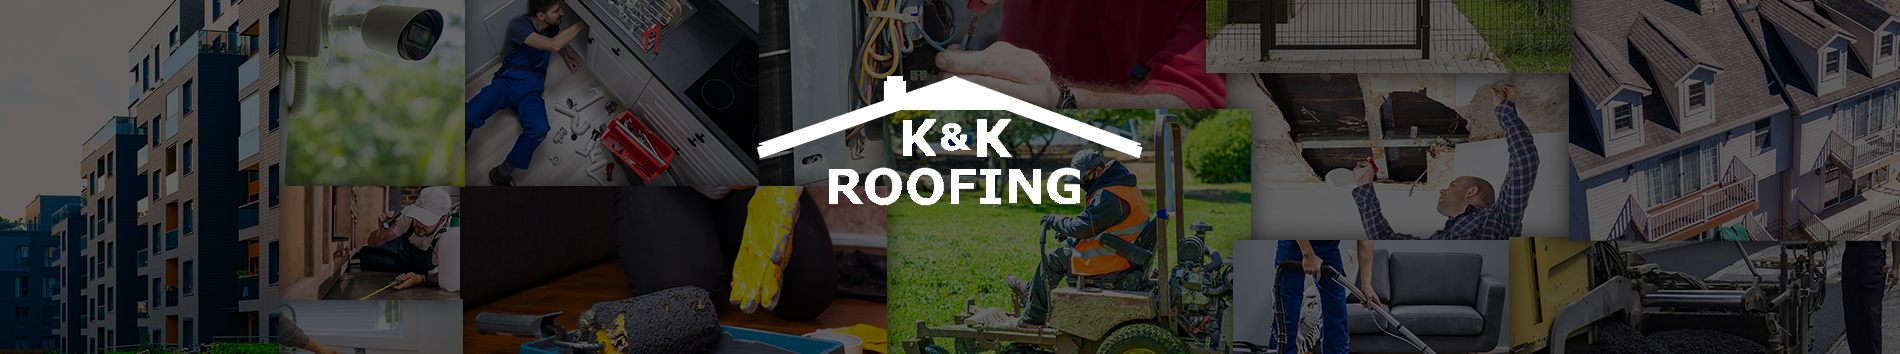 K & K Roofing & Construction